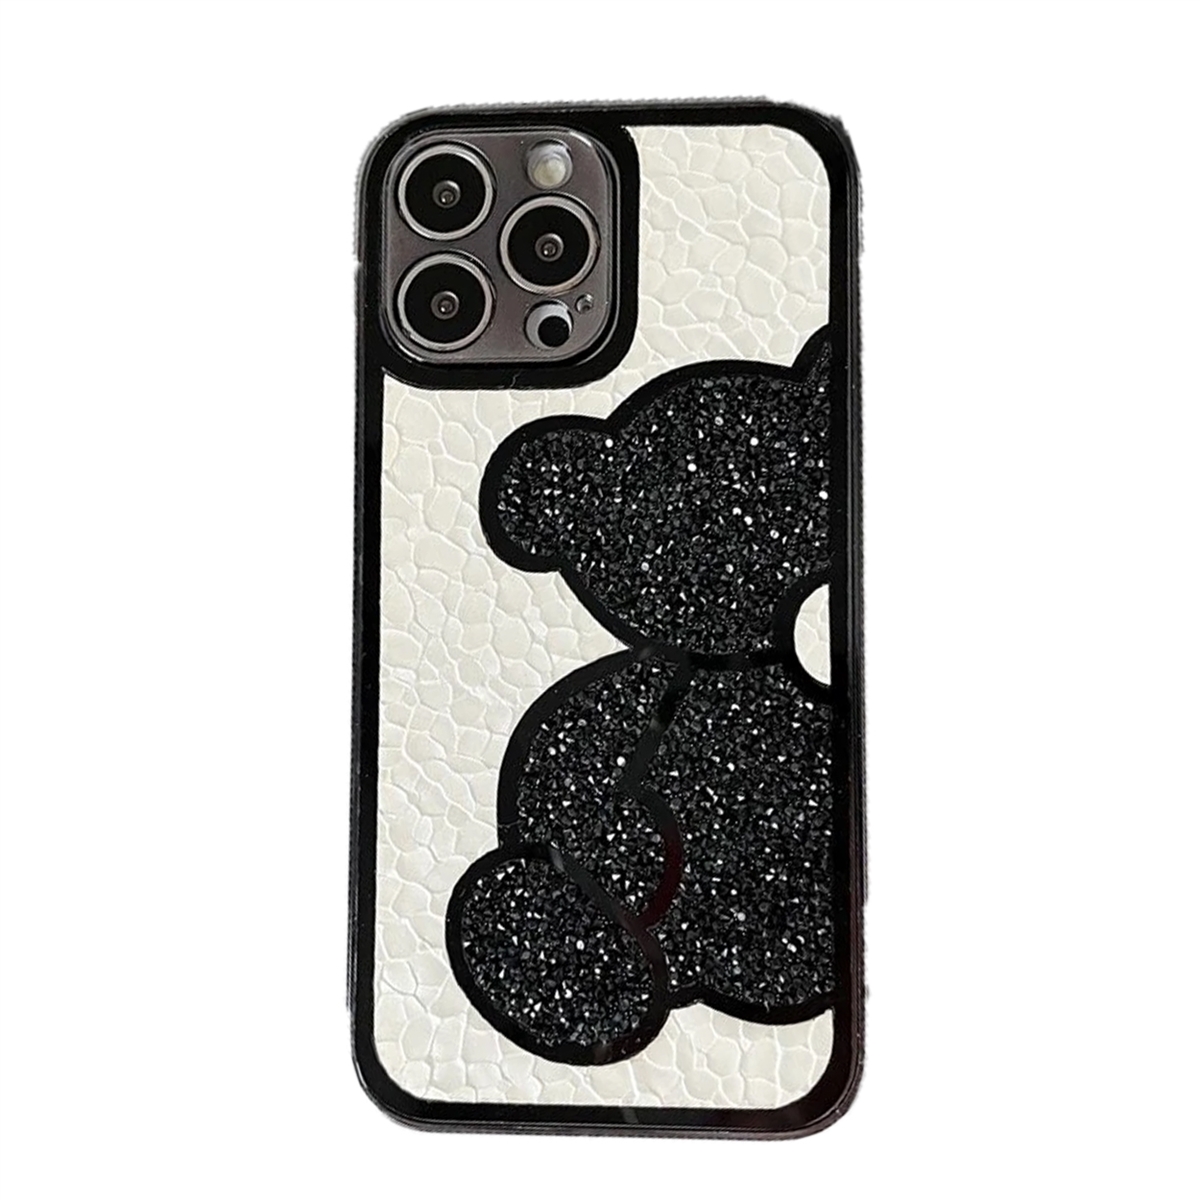 MICHAEL KORS LOGO BLACK iPhone 13 Pro Max Case Cover